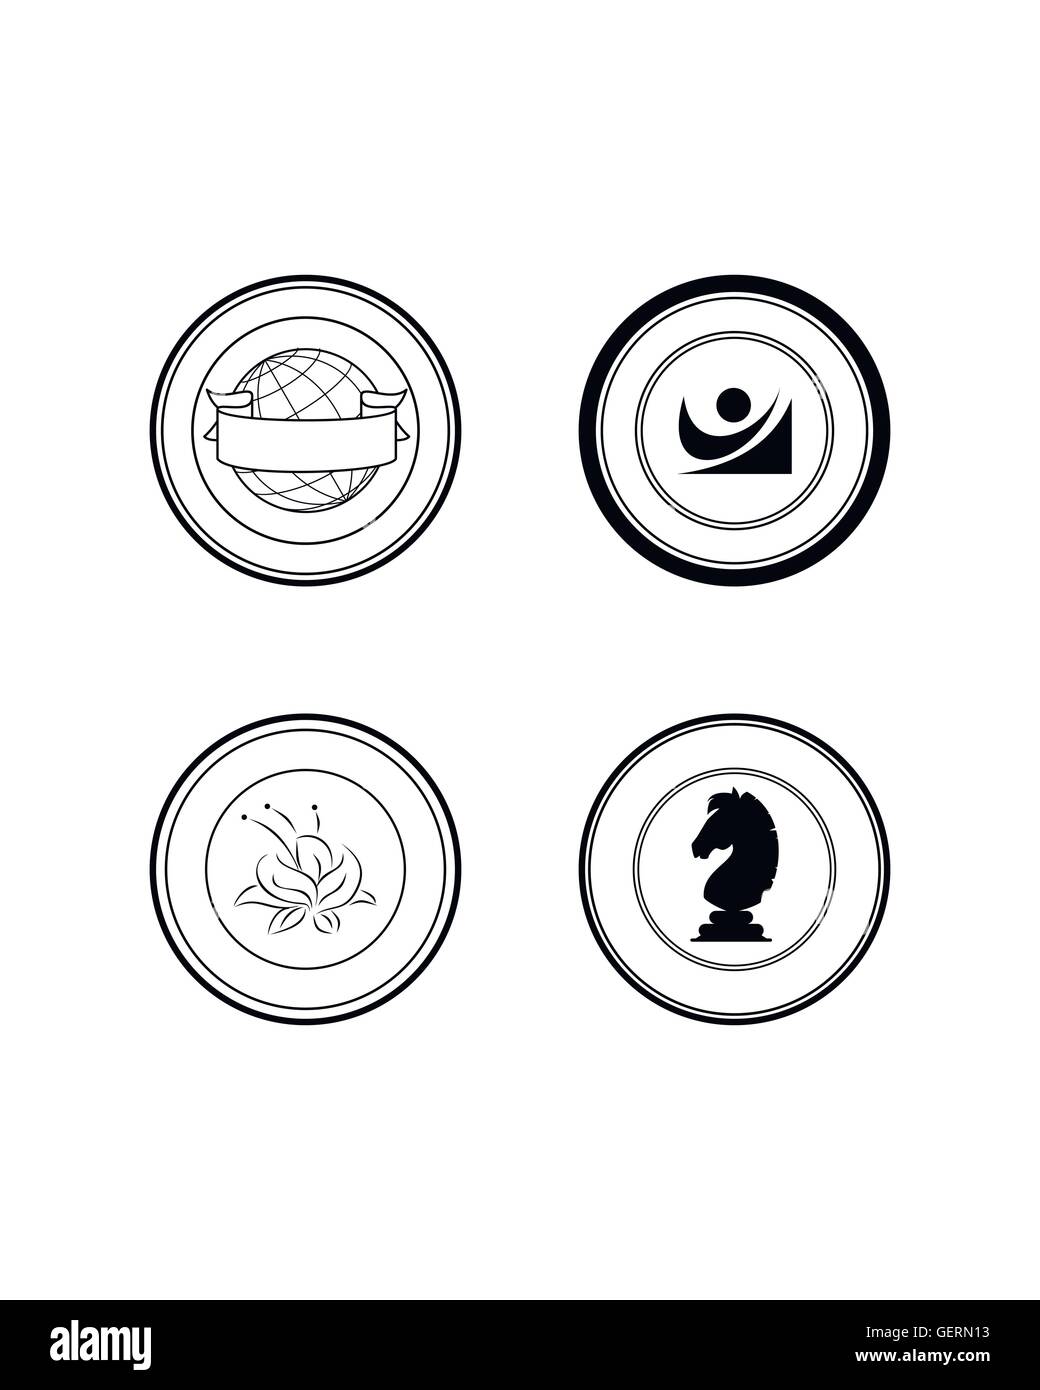 Vector illustration d'un ensemble de quatre timbres Illustration de Vecteur